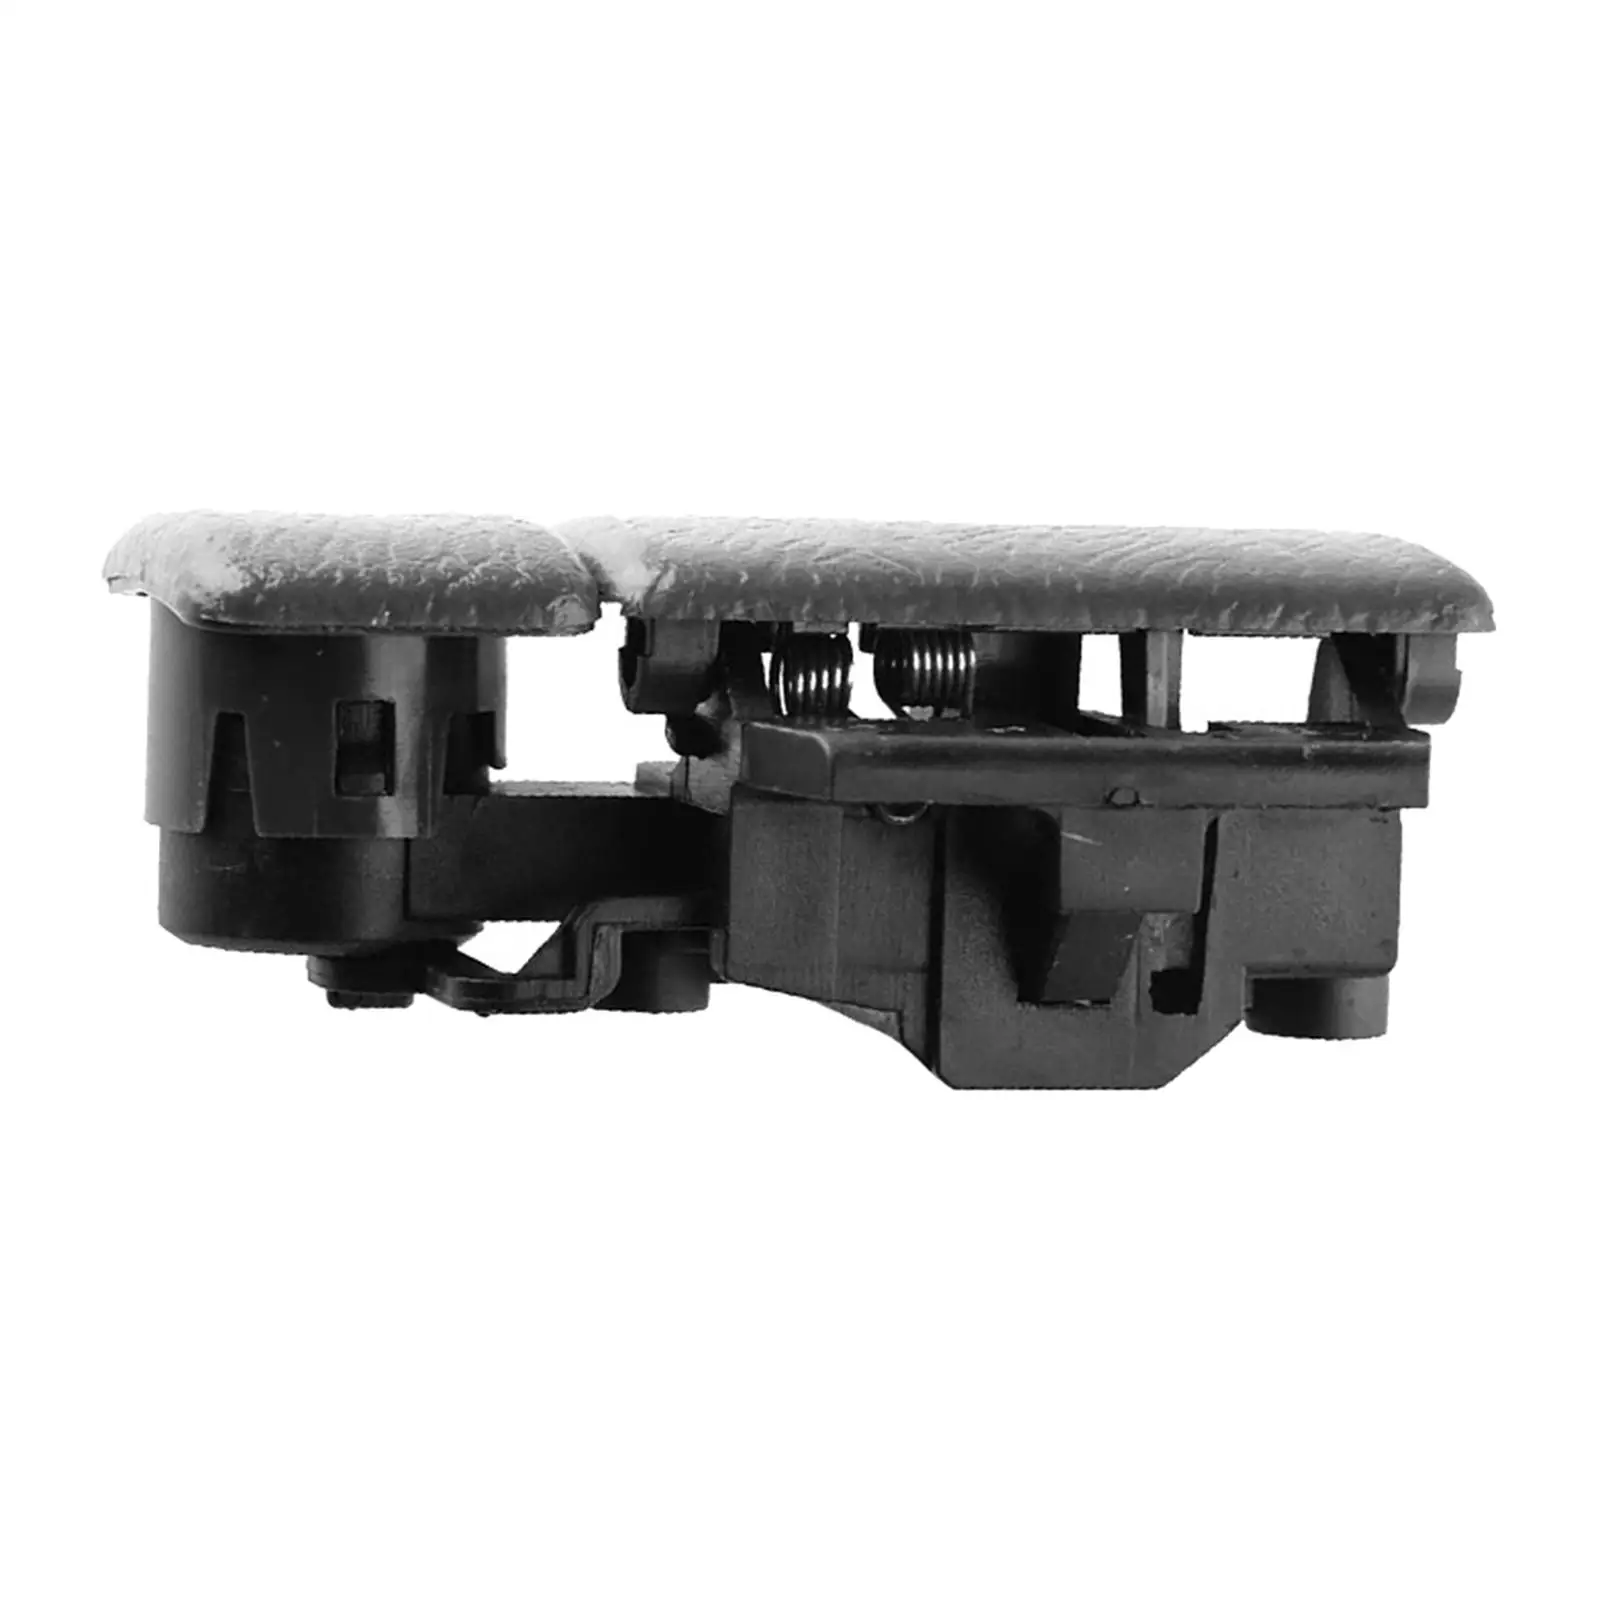 Car Glove Box Lock Latch Handle ABS Plastic Replacement Black for Suzuki Jimny Vitara Grand Vitara Easy to Install Premium